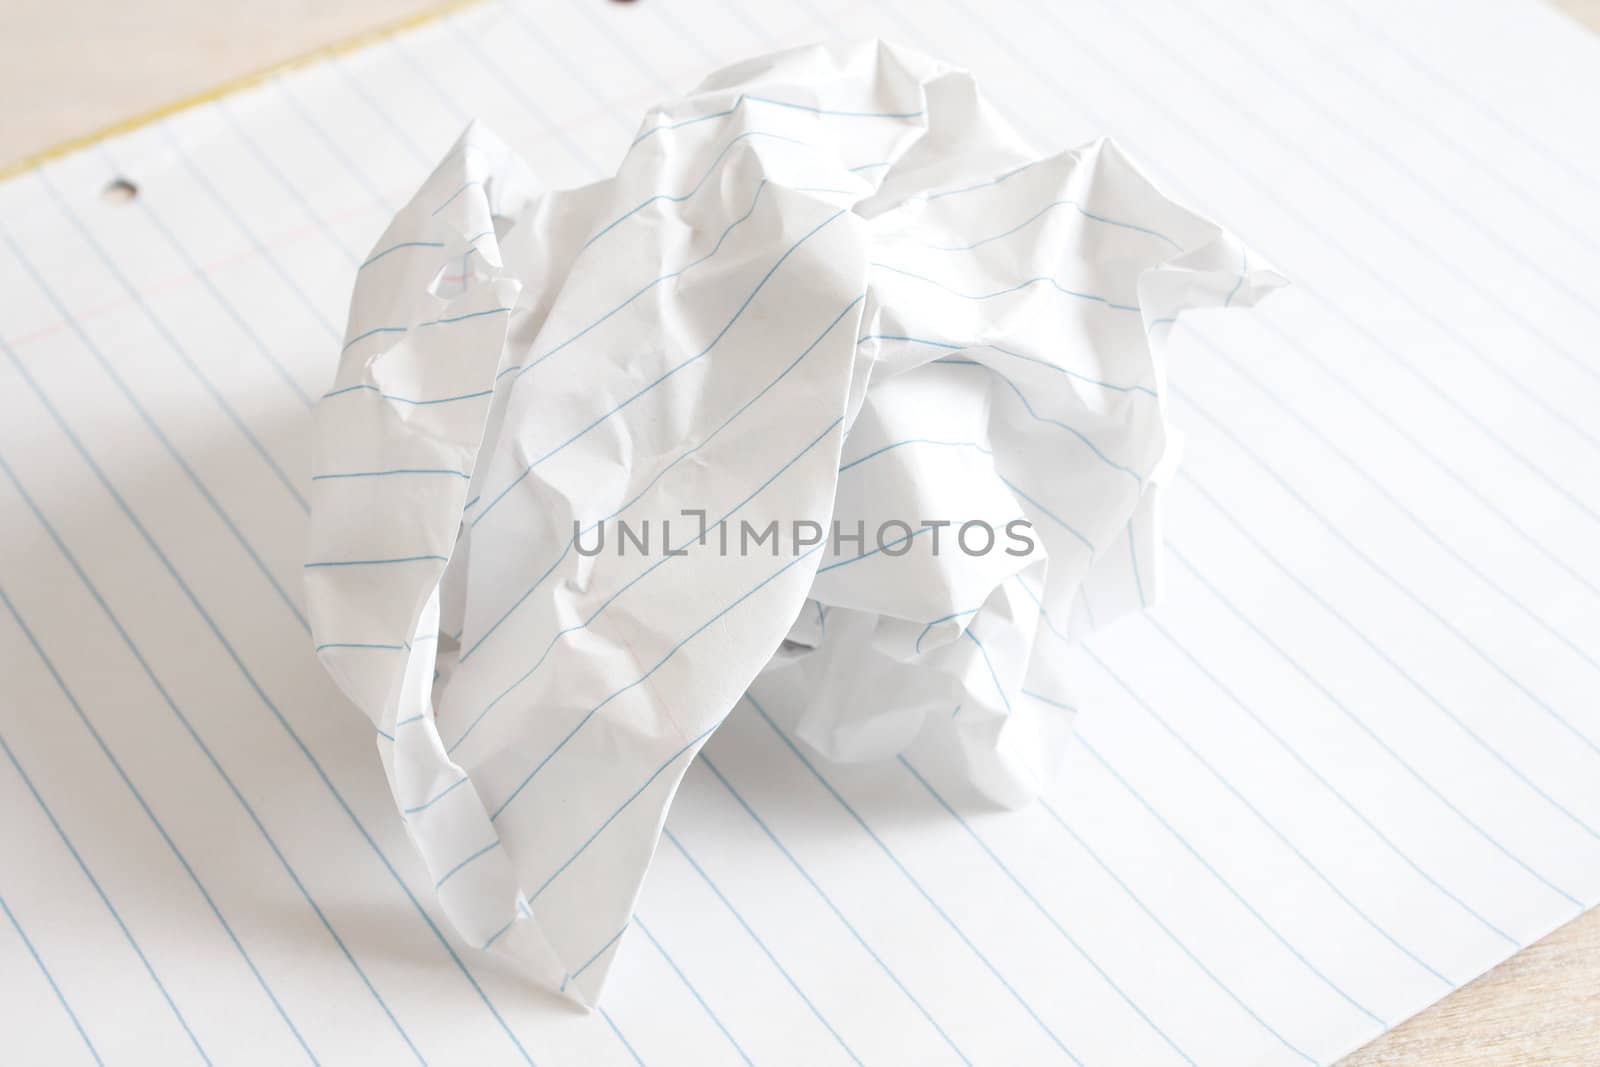 Crumbled paper